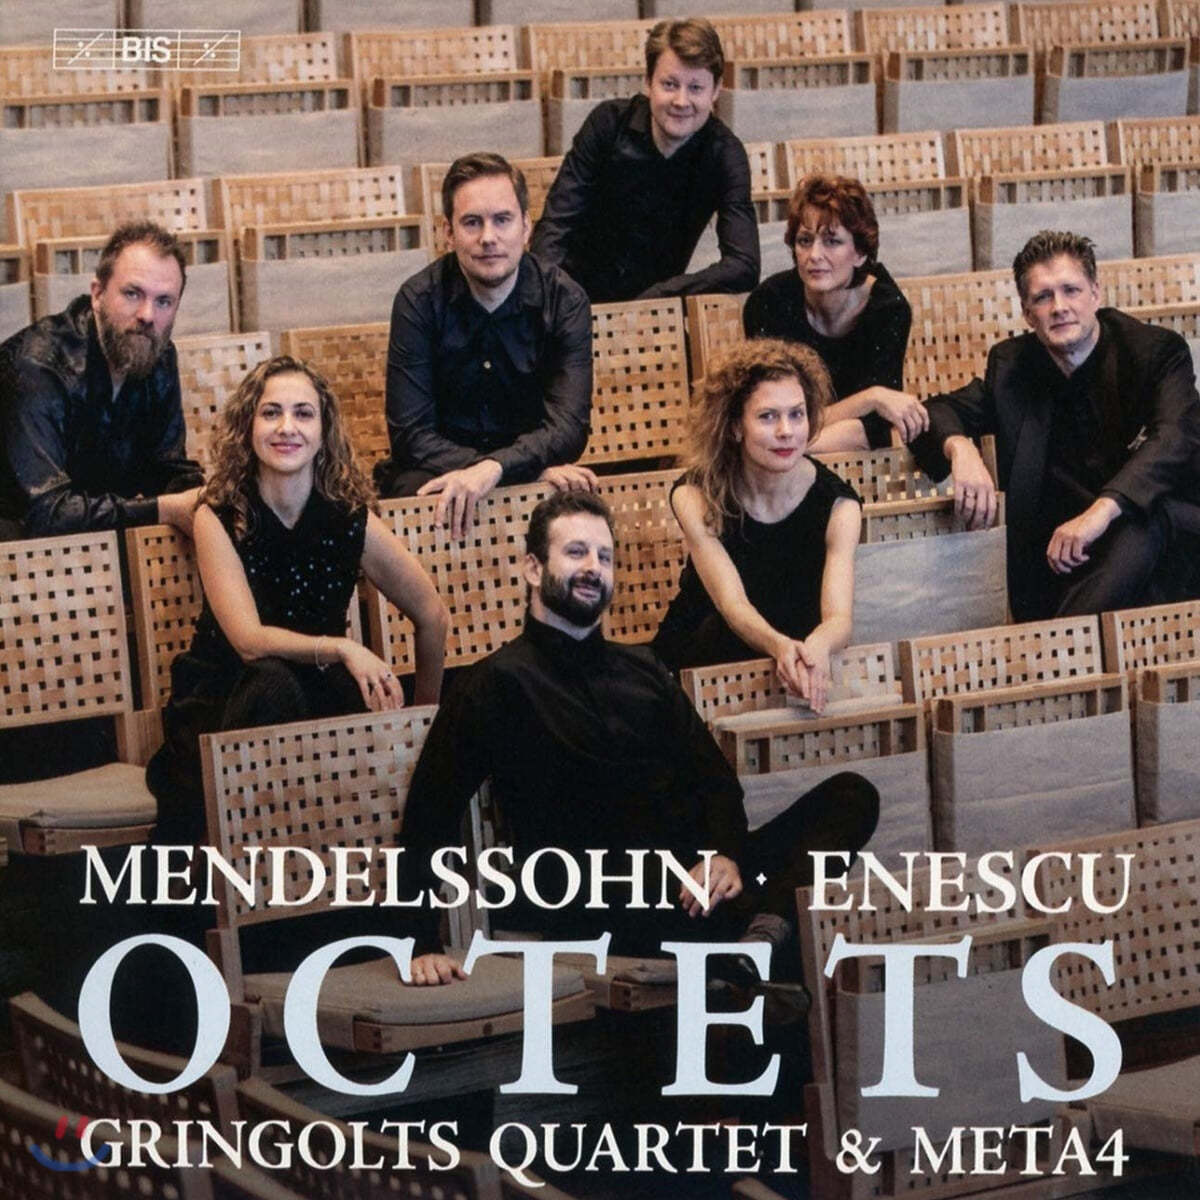 Gringolts Quartet / Meta4 멘델스존 / 에네스쿠: 8중주 (Mendelssohn / Enescu: Octets)